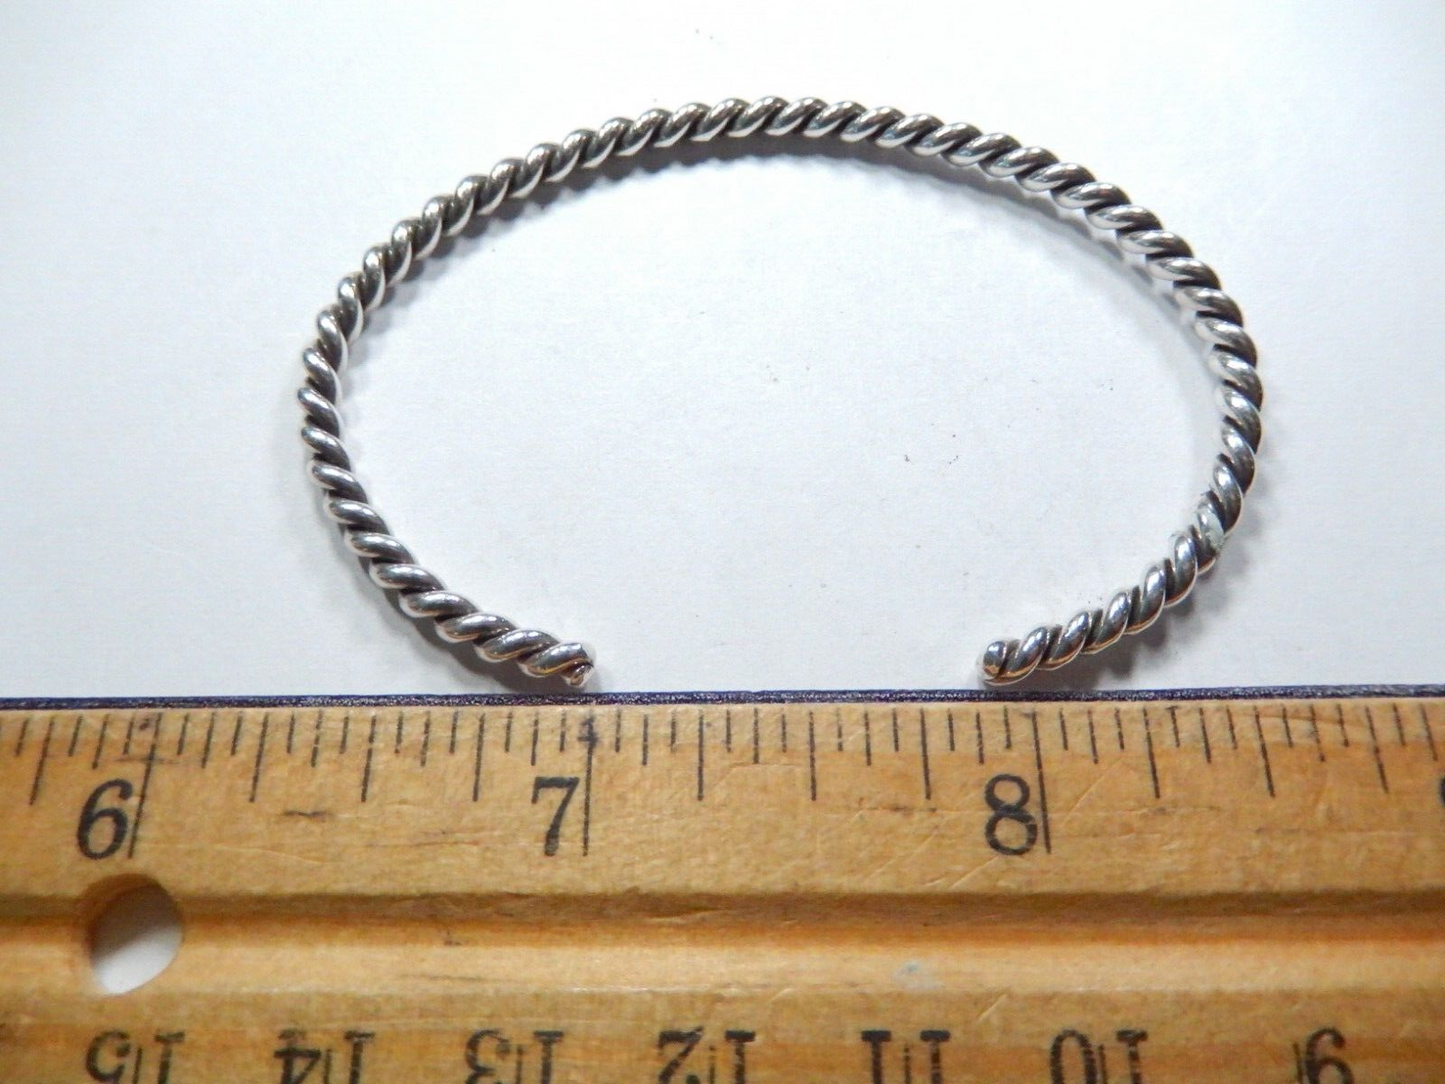 Vintage Sterling Silver Twisted Cuff Bracelet